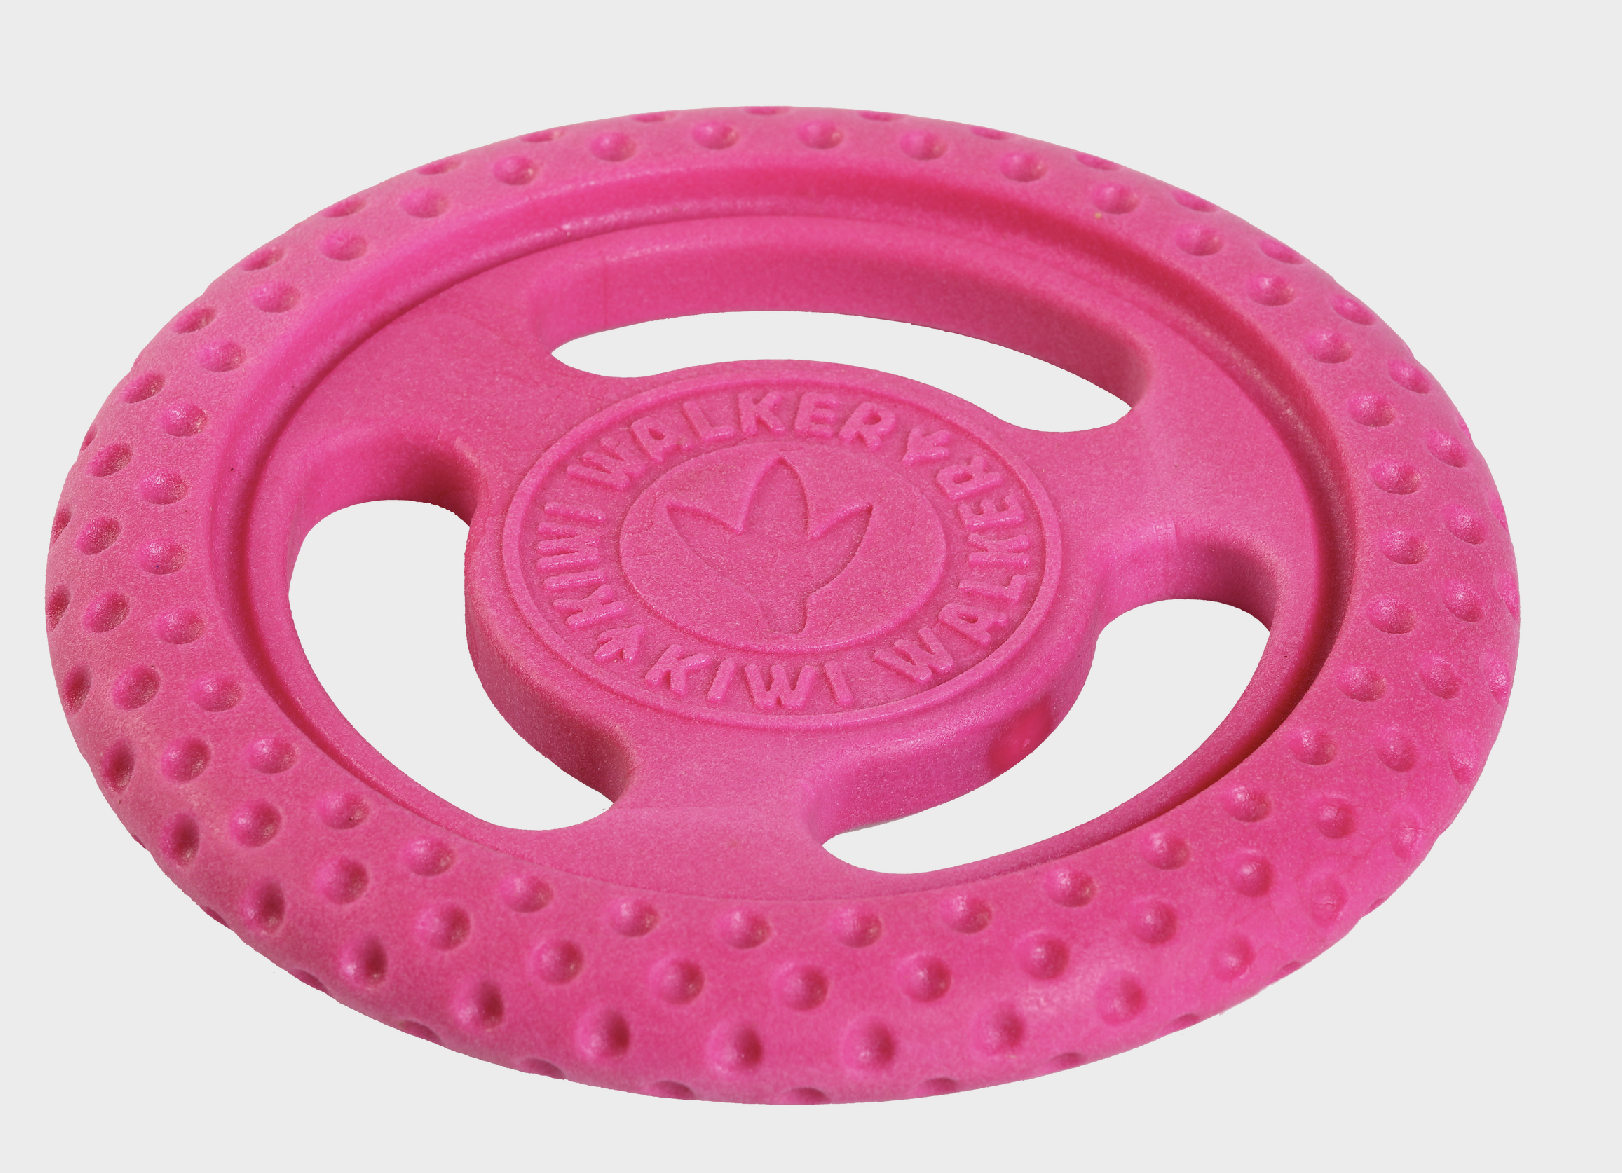 Hračka Kiwi Walker házecí/plovací frisbee z TPR gumy MAXI 22 cm Barva: růžová